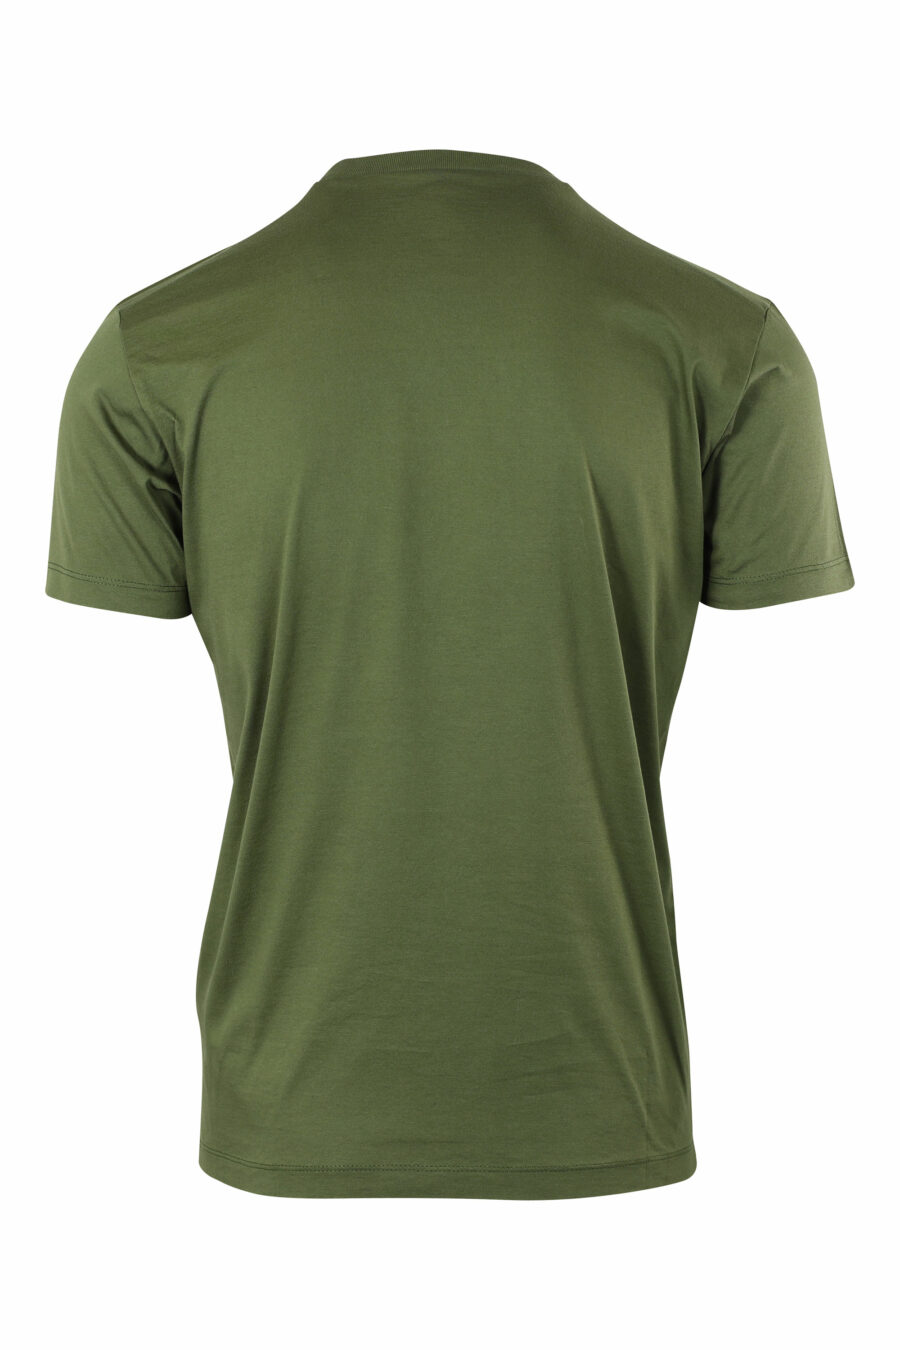 Camiseta verde con maxilogo multicolor - IMG 9654